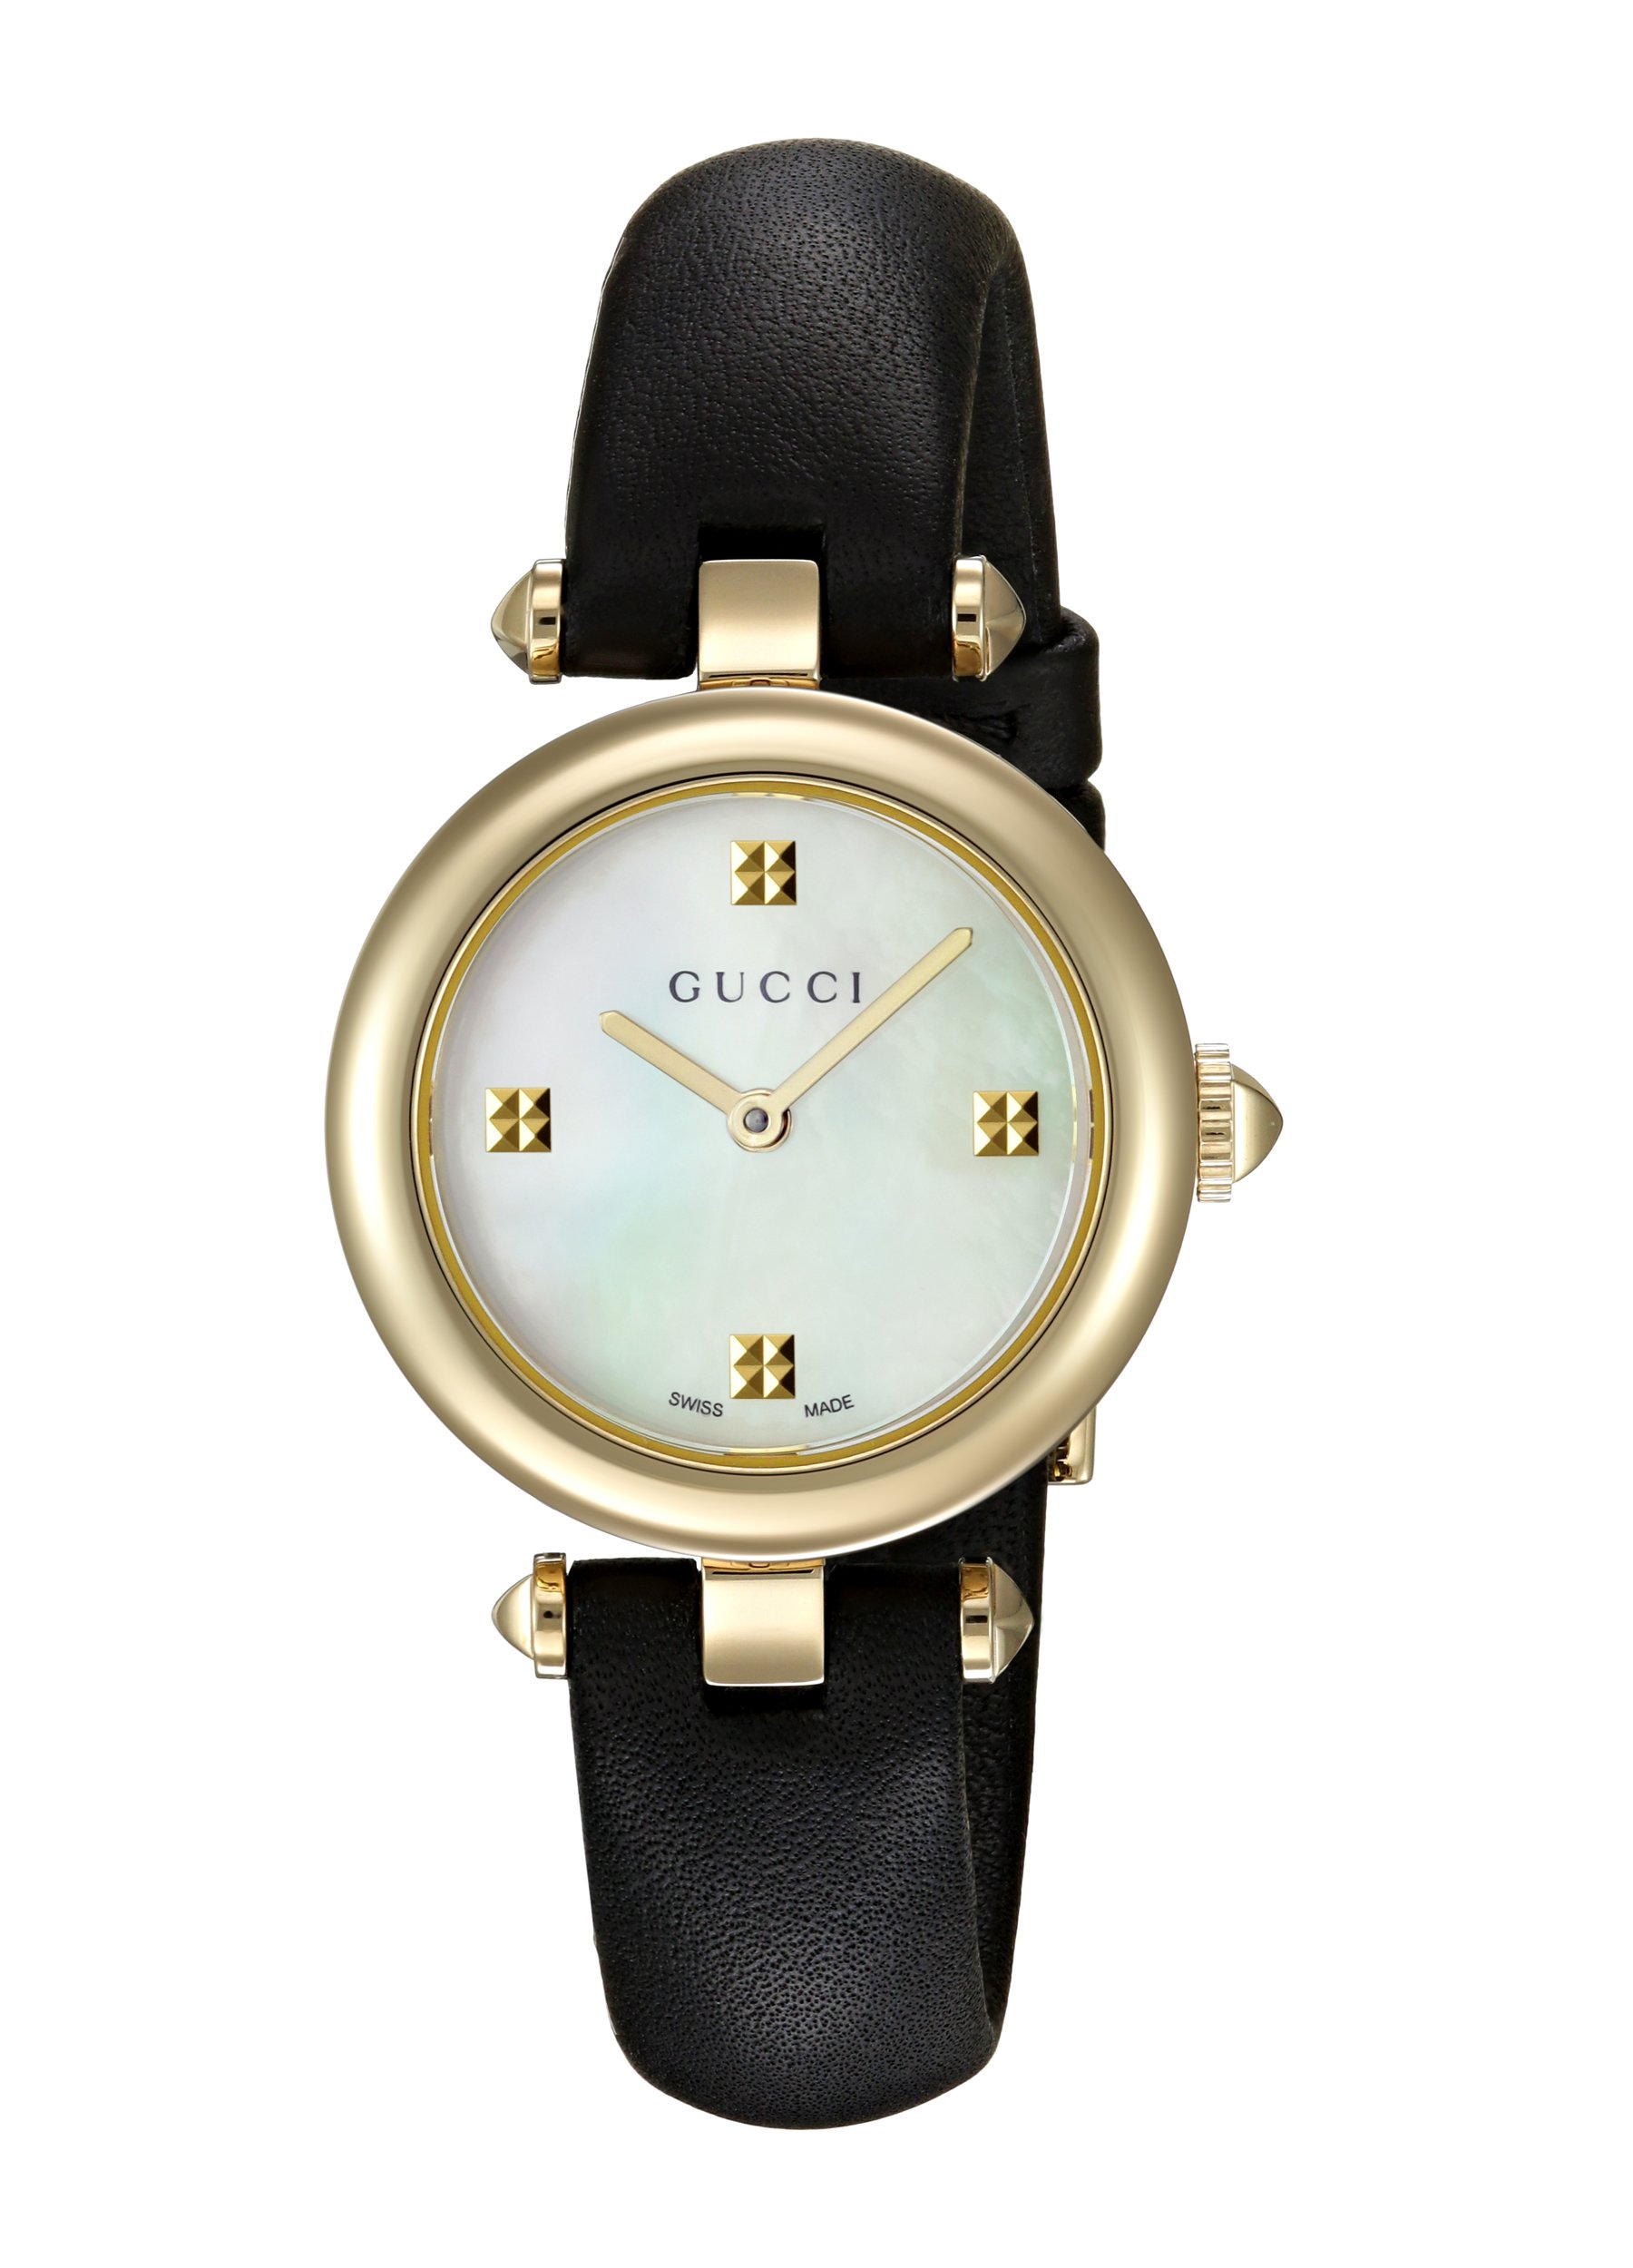 Gucci Swiss Quartz Gold-Tone and Leather Dress Black Women's Watch(Model: YA141505)